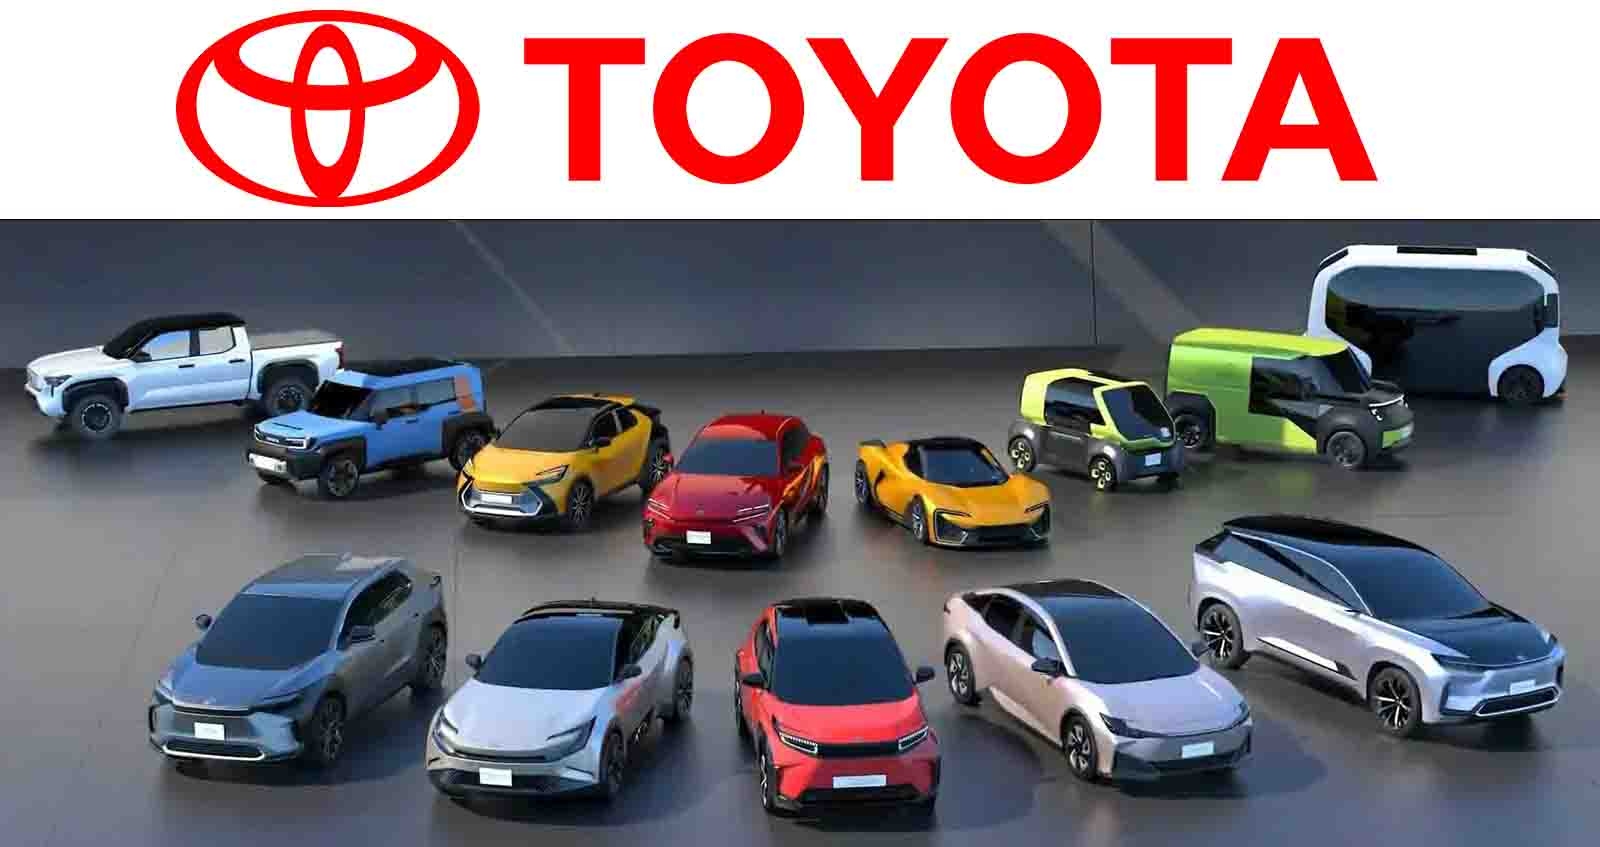 TOYOTA และ Lexus เปิดตัว รถยนต์ไฟฟ้าต้นแบบ  16 รุ่นย่อย ครอบคลุมกระบะ ครอสโอเวอร์ MPV สปอร์ต SUV